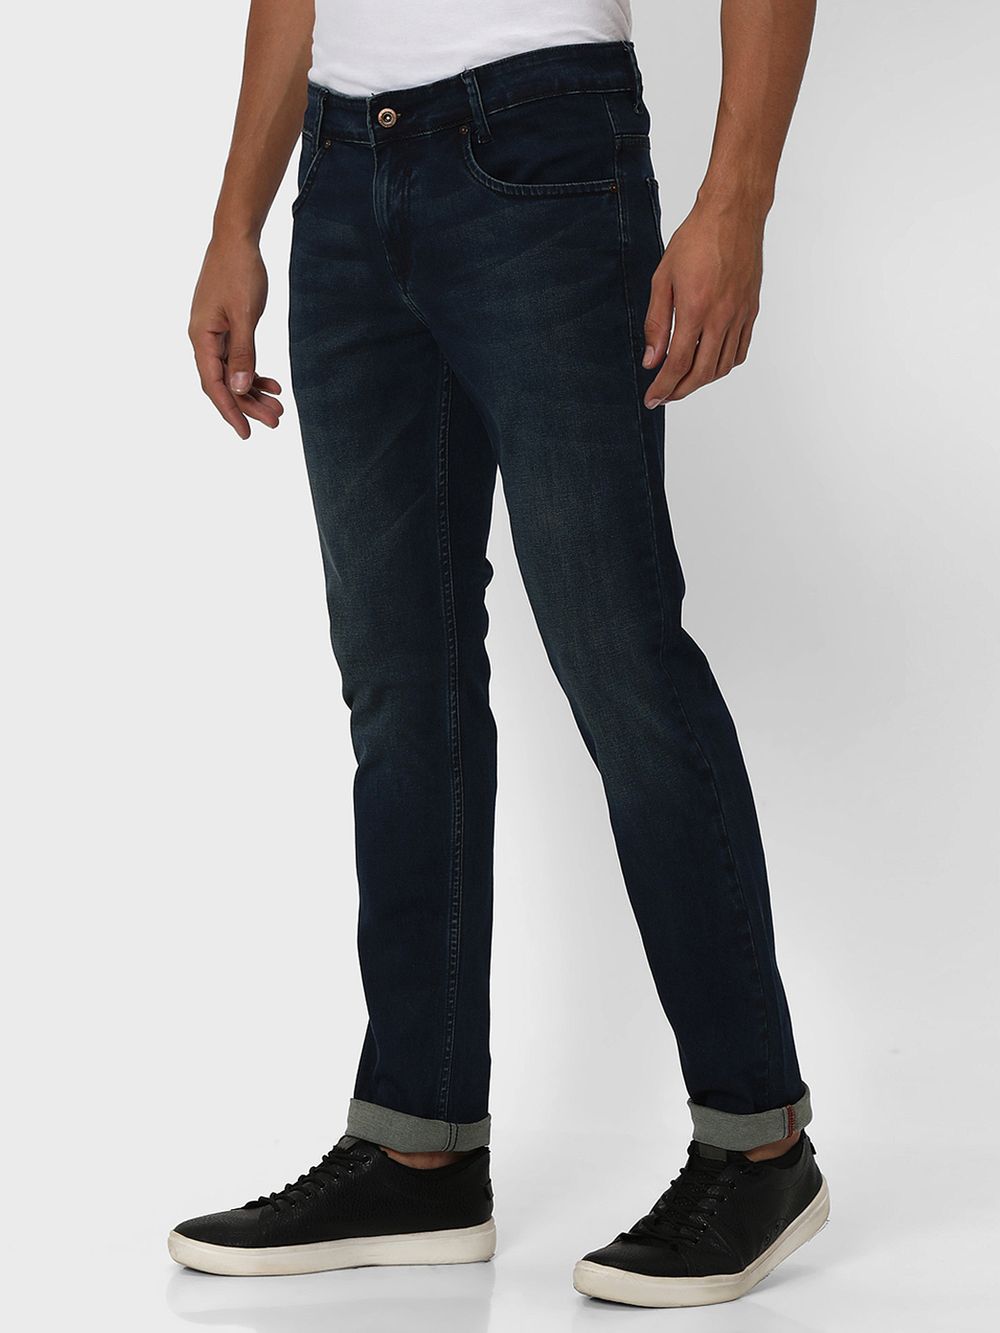 Tinted Narrow Fit Originals Stretch Jeans